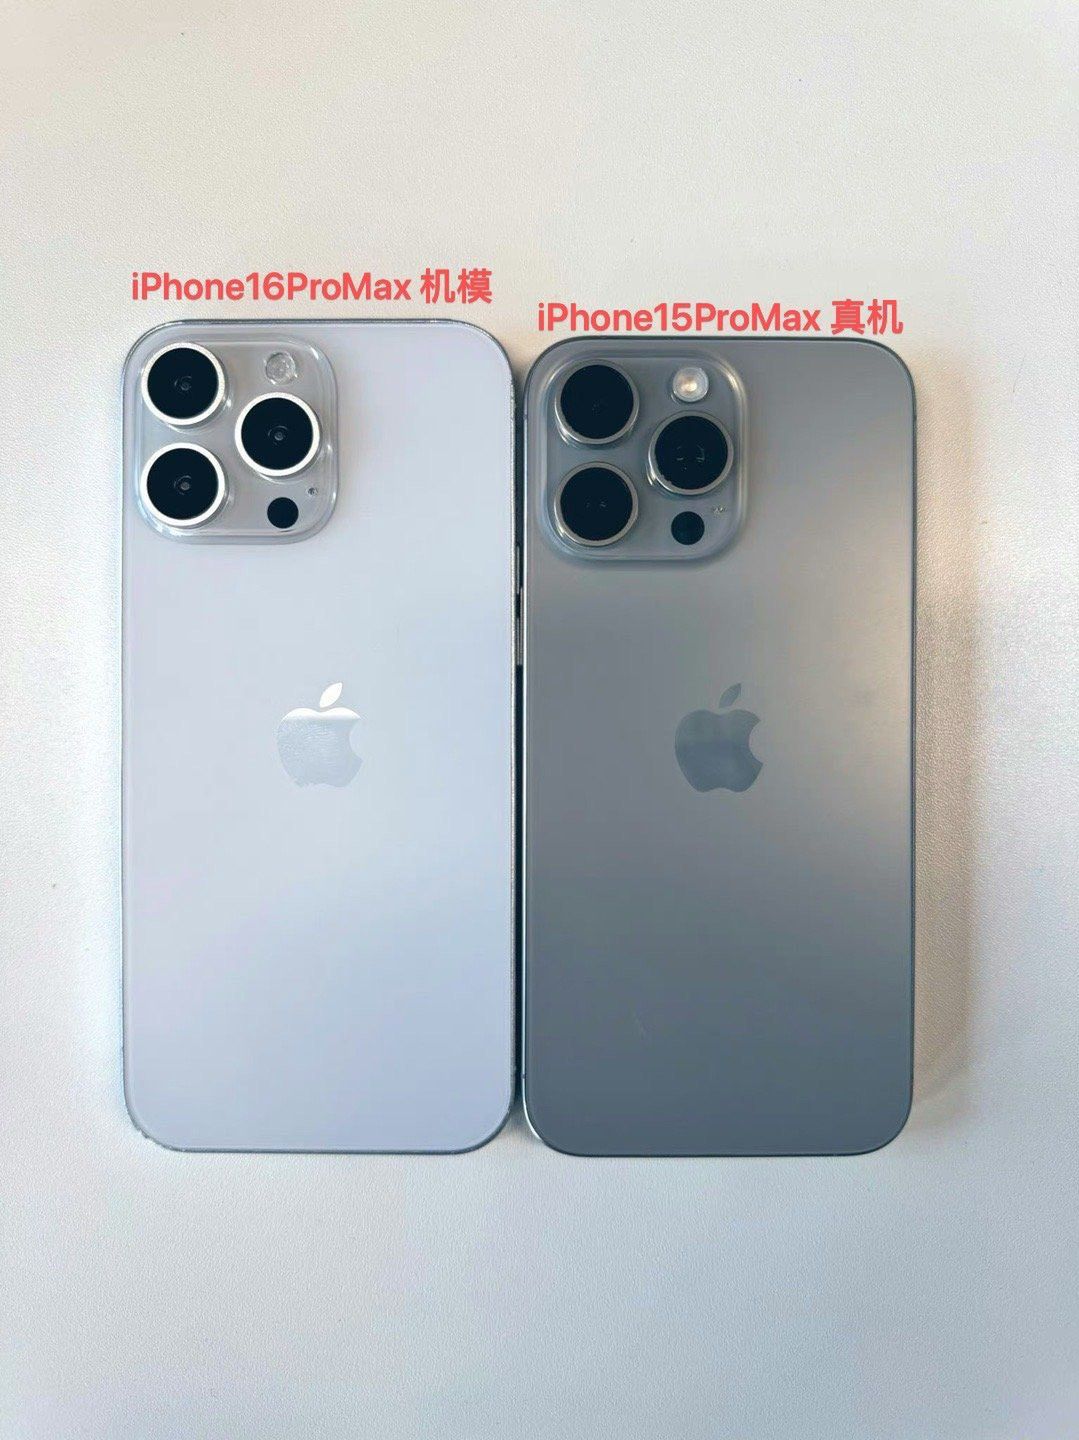 Porównanie iPhone'a 16 i iPhone'a 15